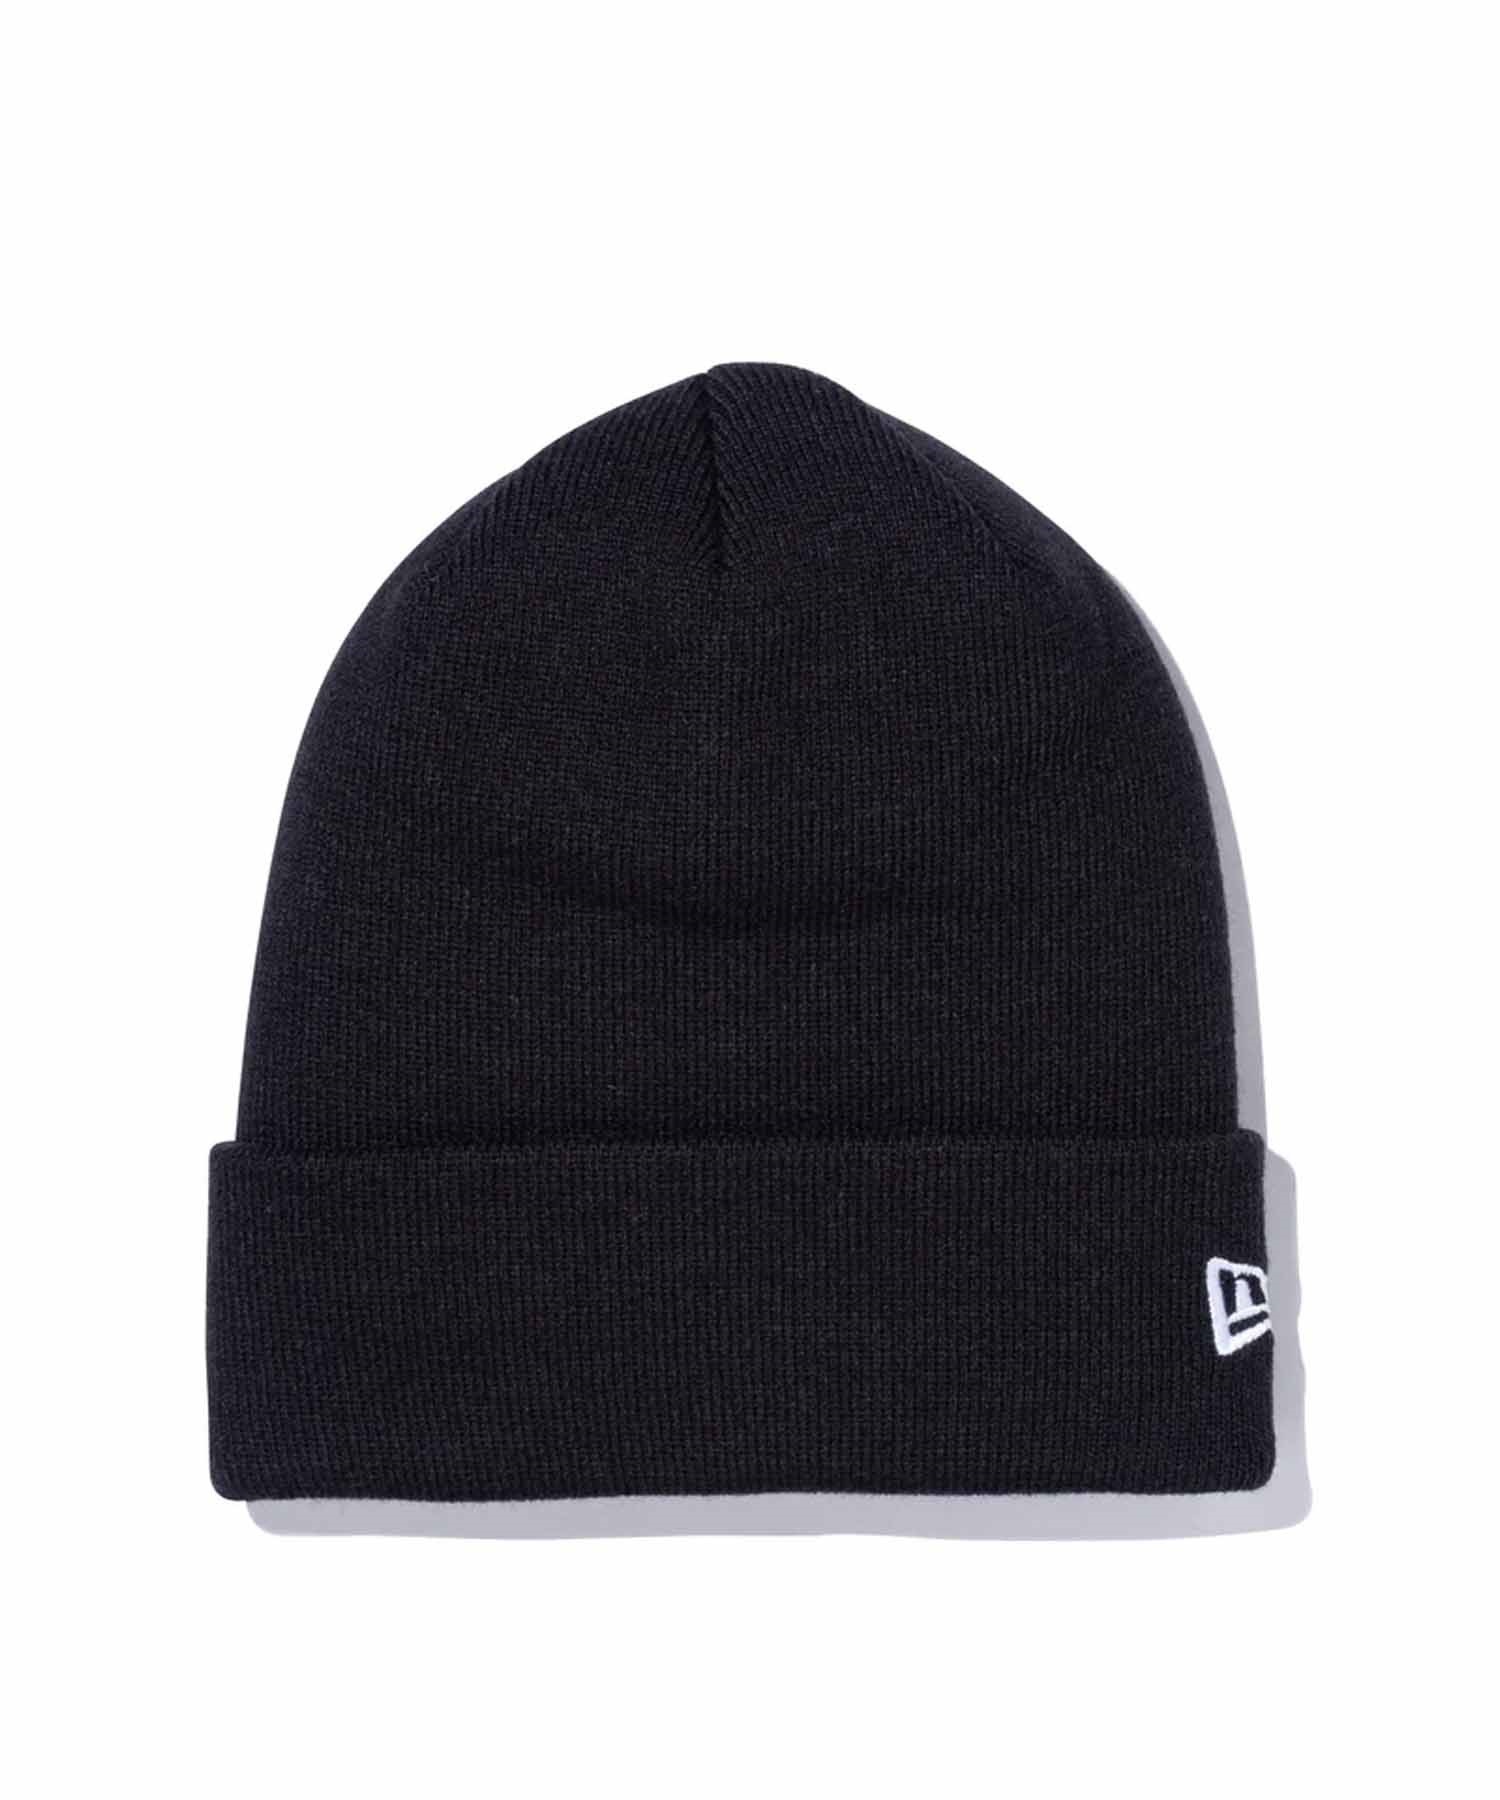 NEW ERA/ニューエラ ビーニー ベーシック カフニット ブラック ホワイトフラッグ ニット帽 11120507(BK-FREE)